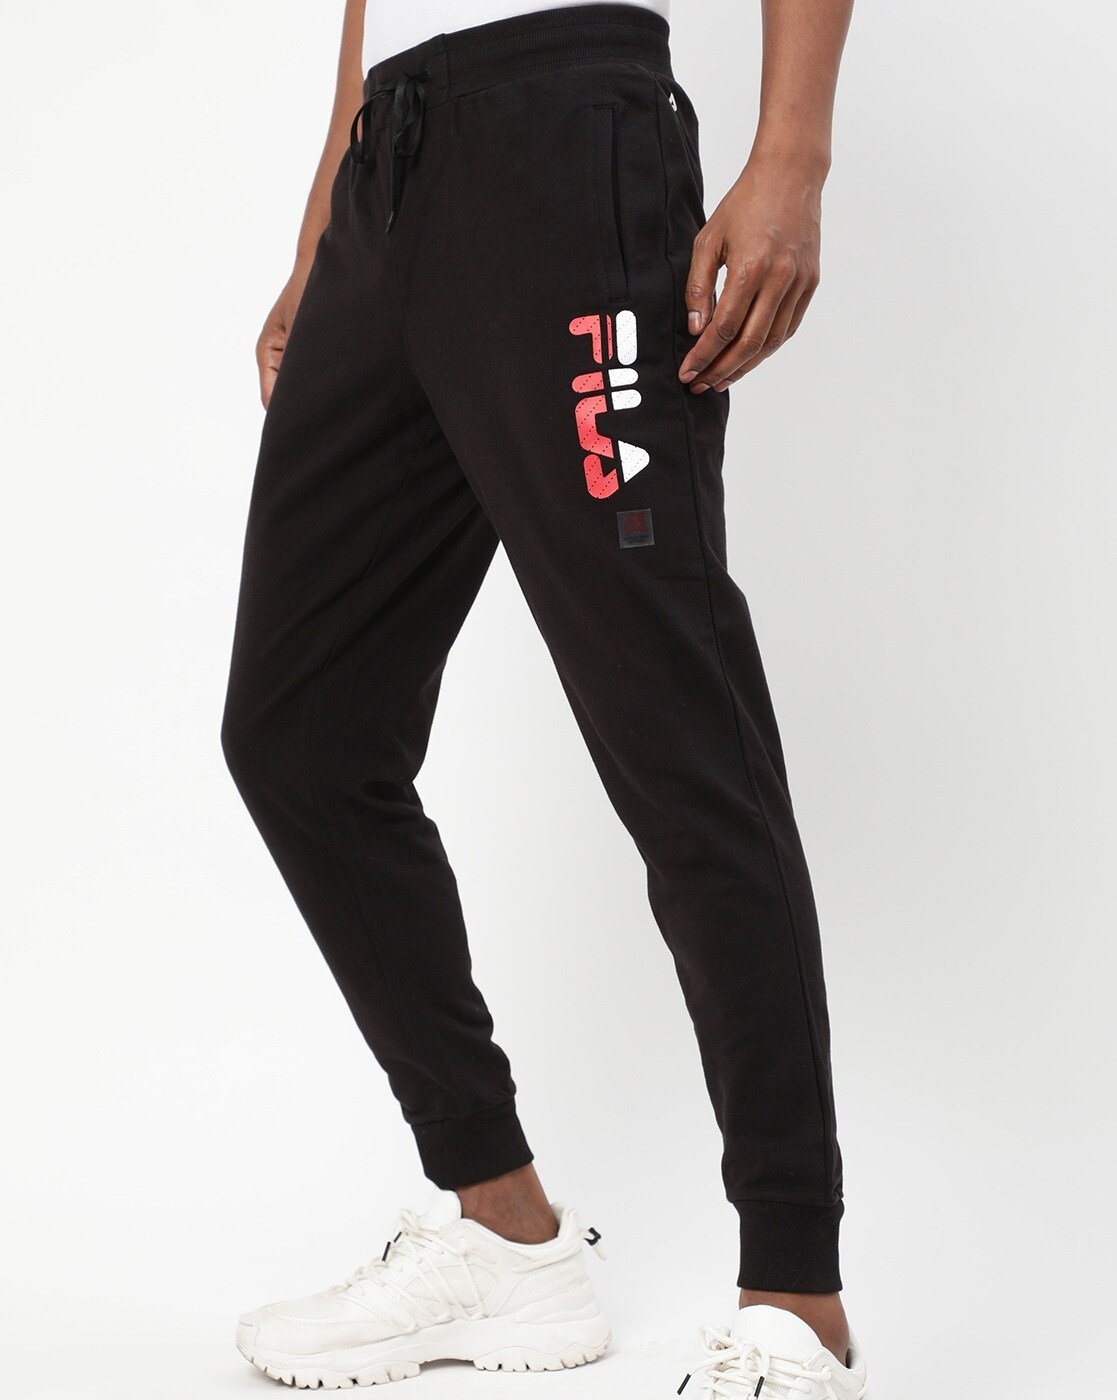 Buy Black Track Pants for Men by FILA Online